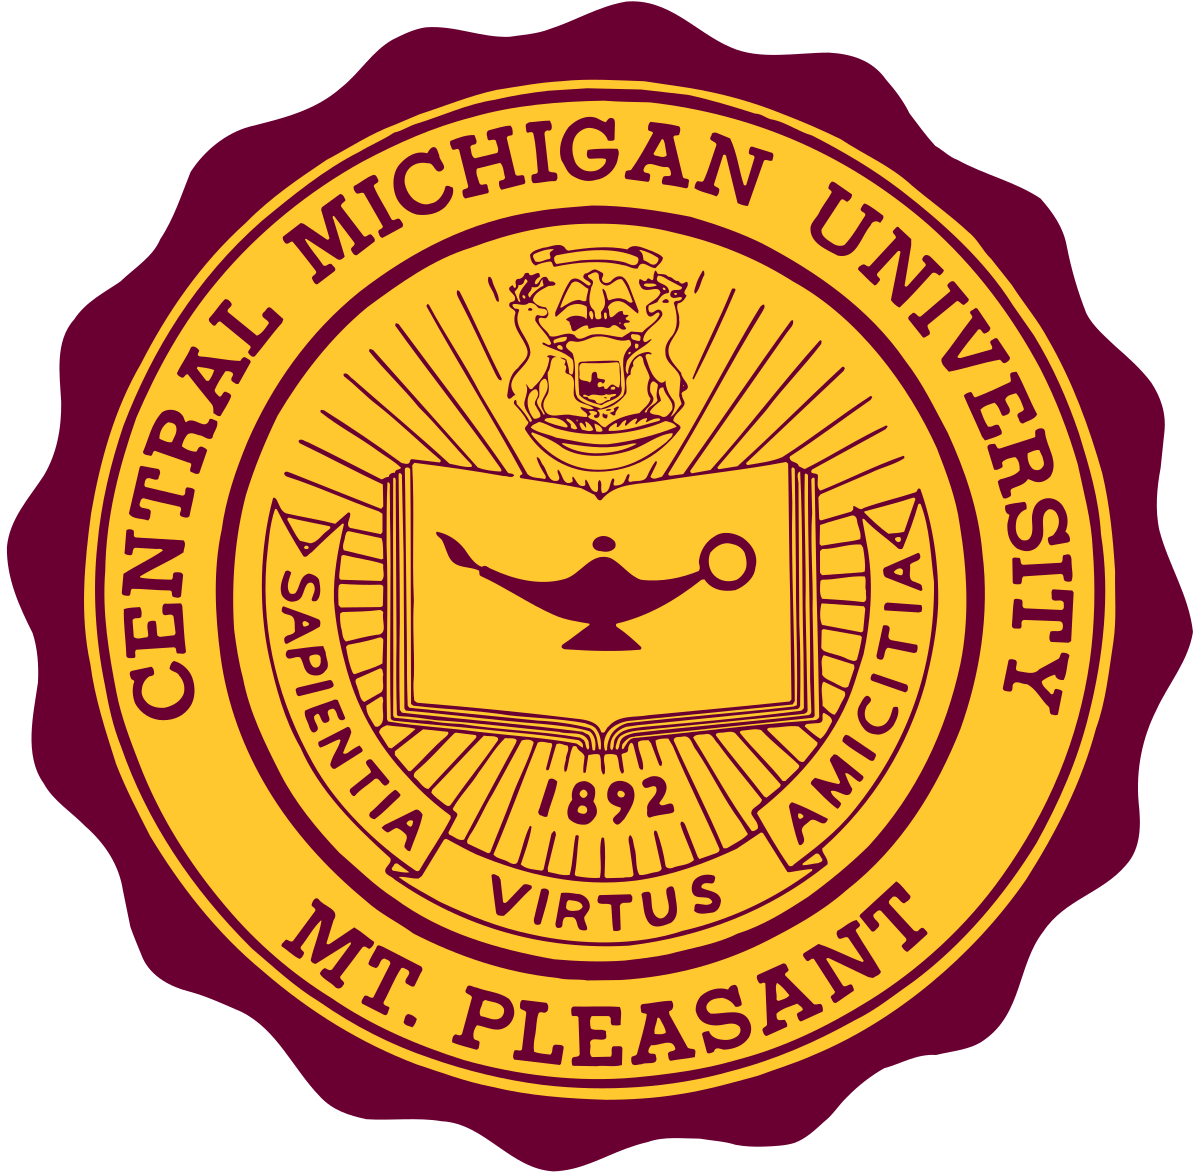 Central Michigan University Wikipedia